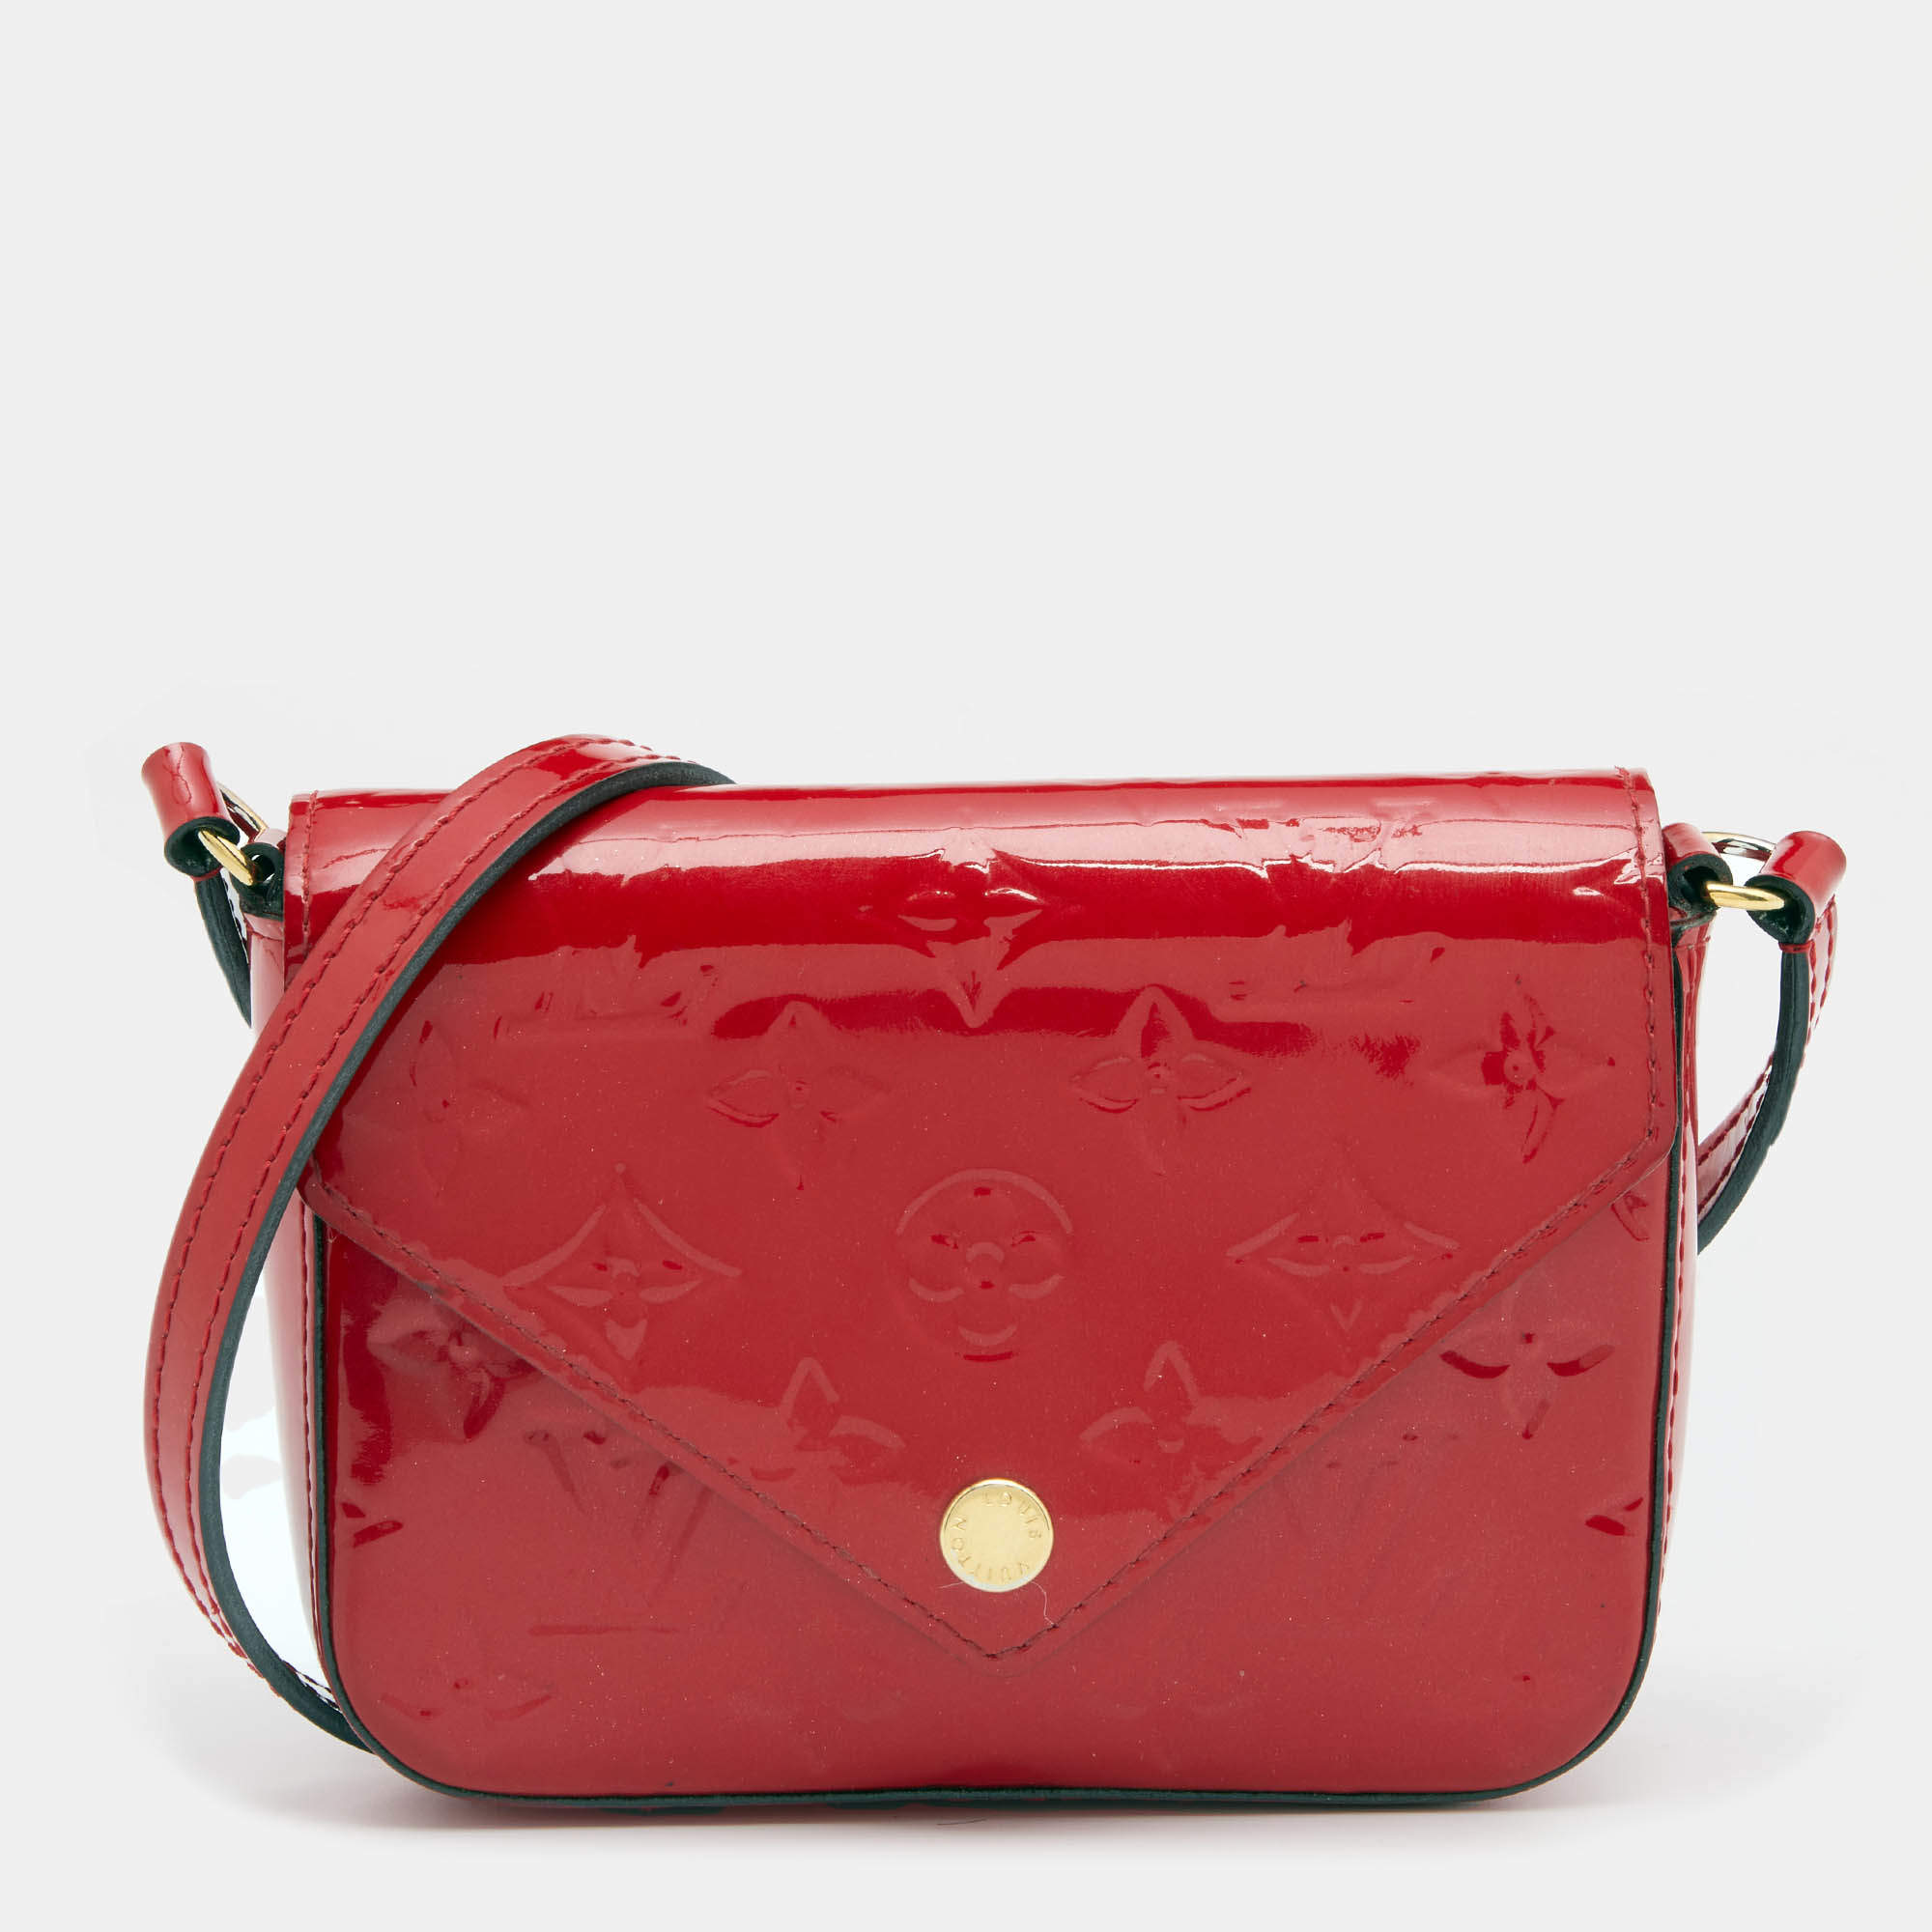 Louis Vuitton Vernis Pochette Mini Shoulder Bag in Red